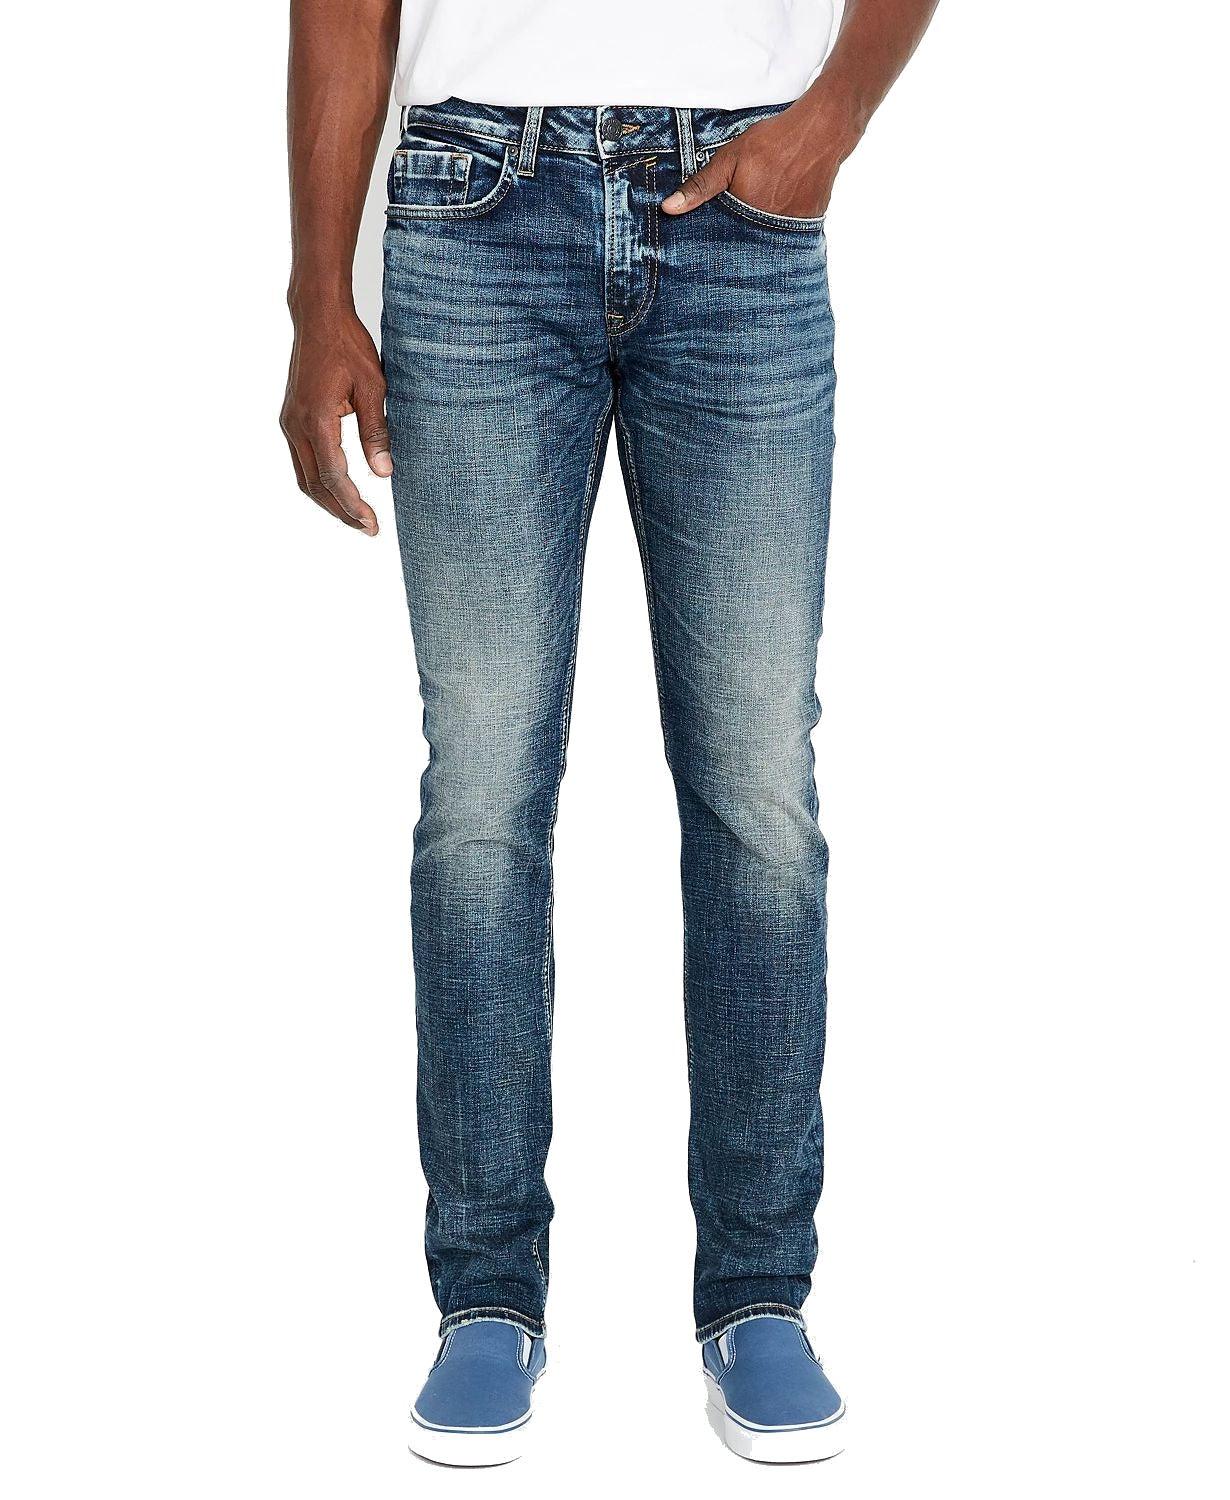 Buffalo David Bitton Denim Jeans Size 30x32 Skinny Stretch In Blue For Men Lyst